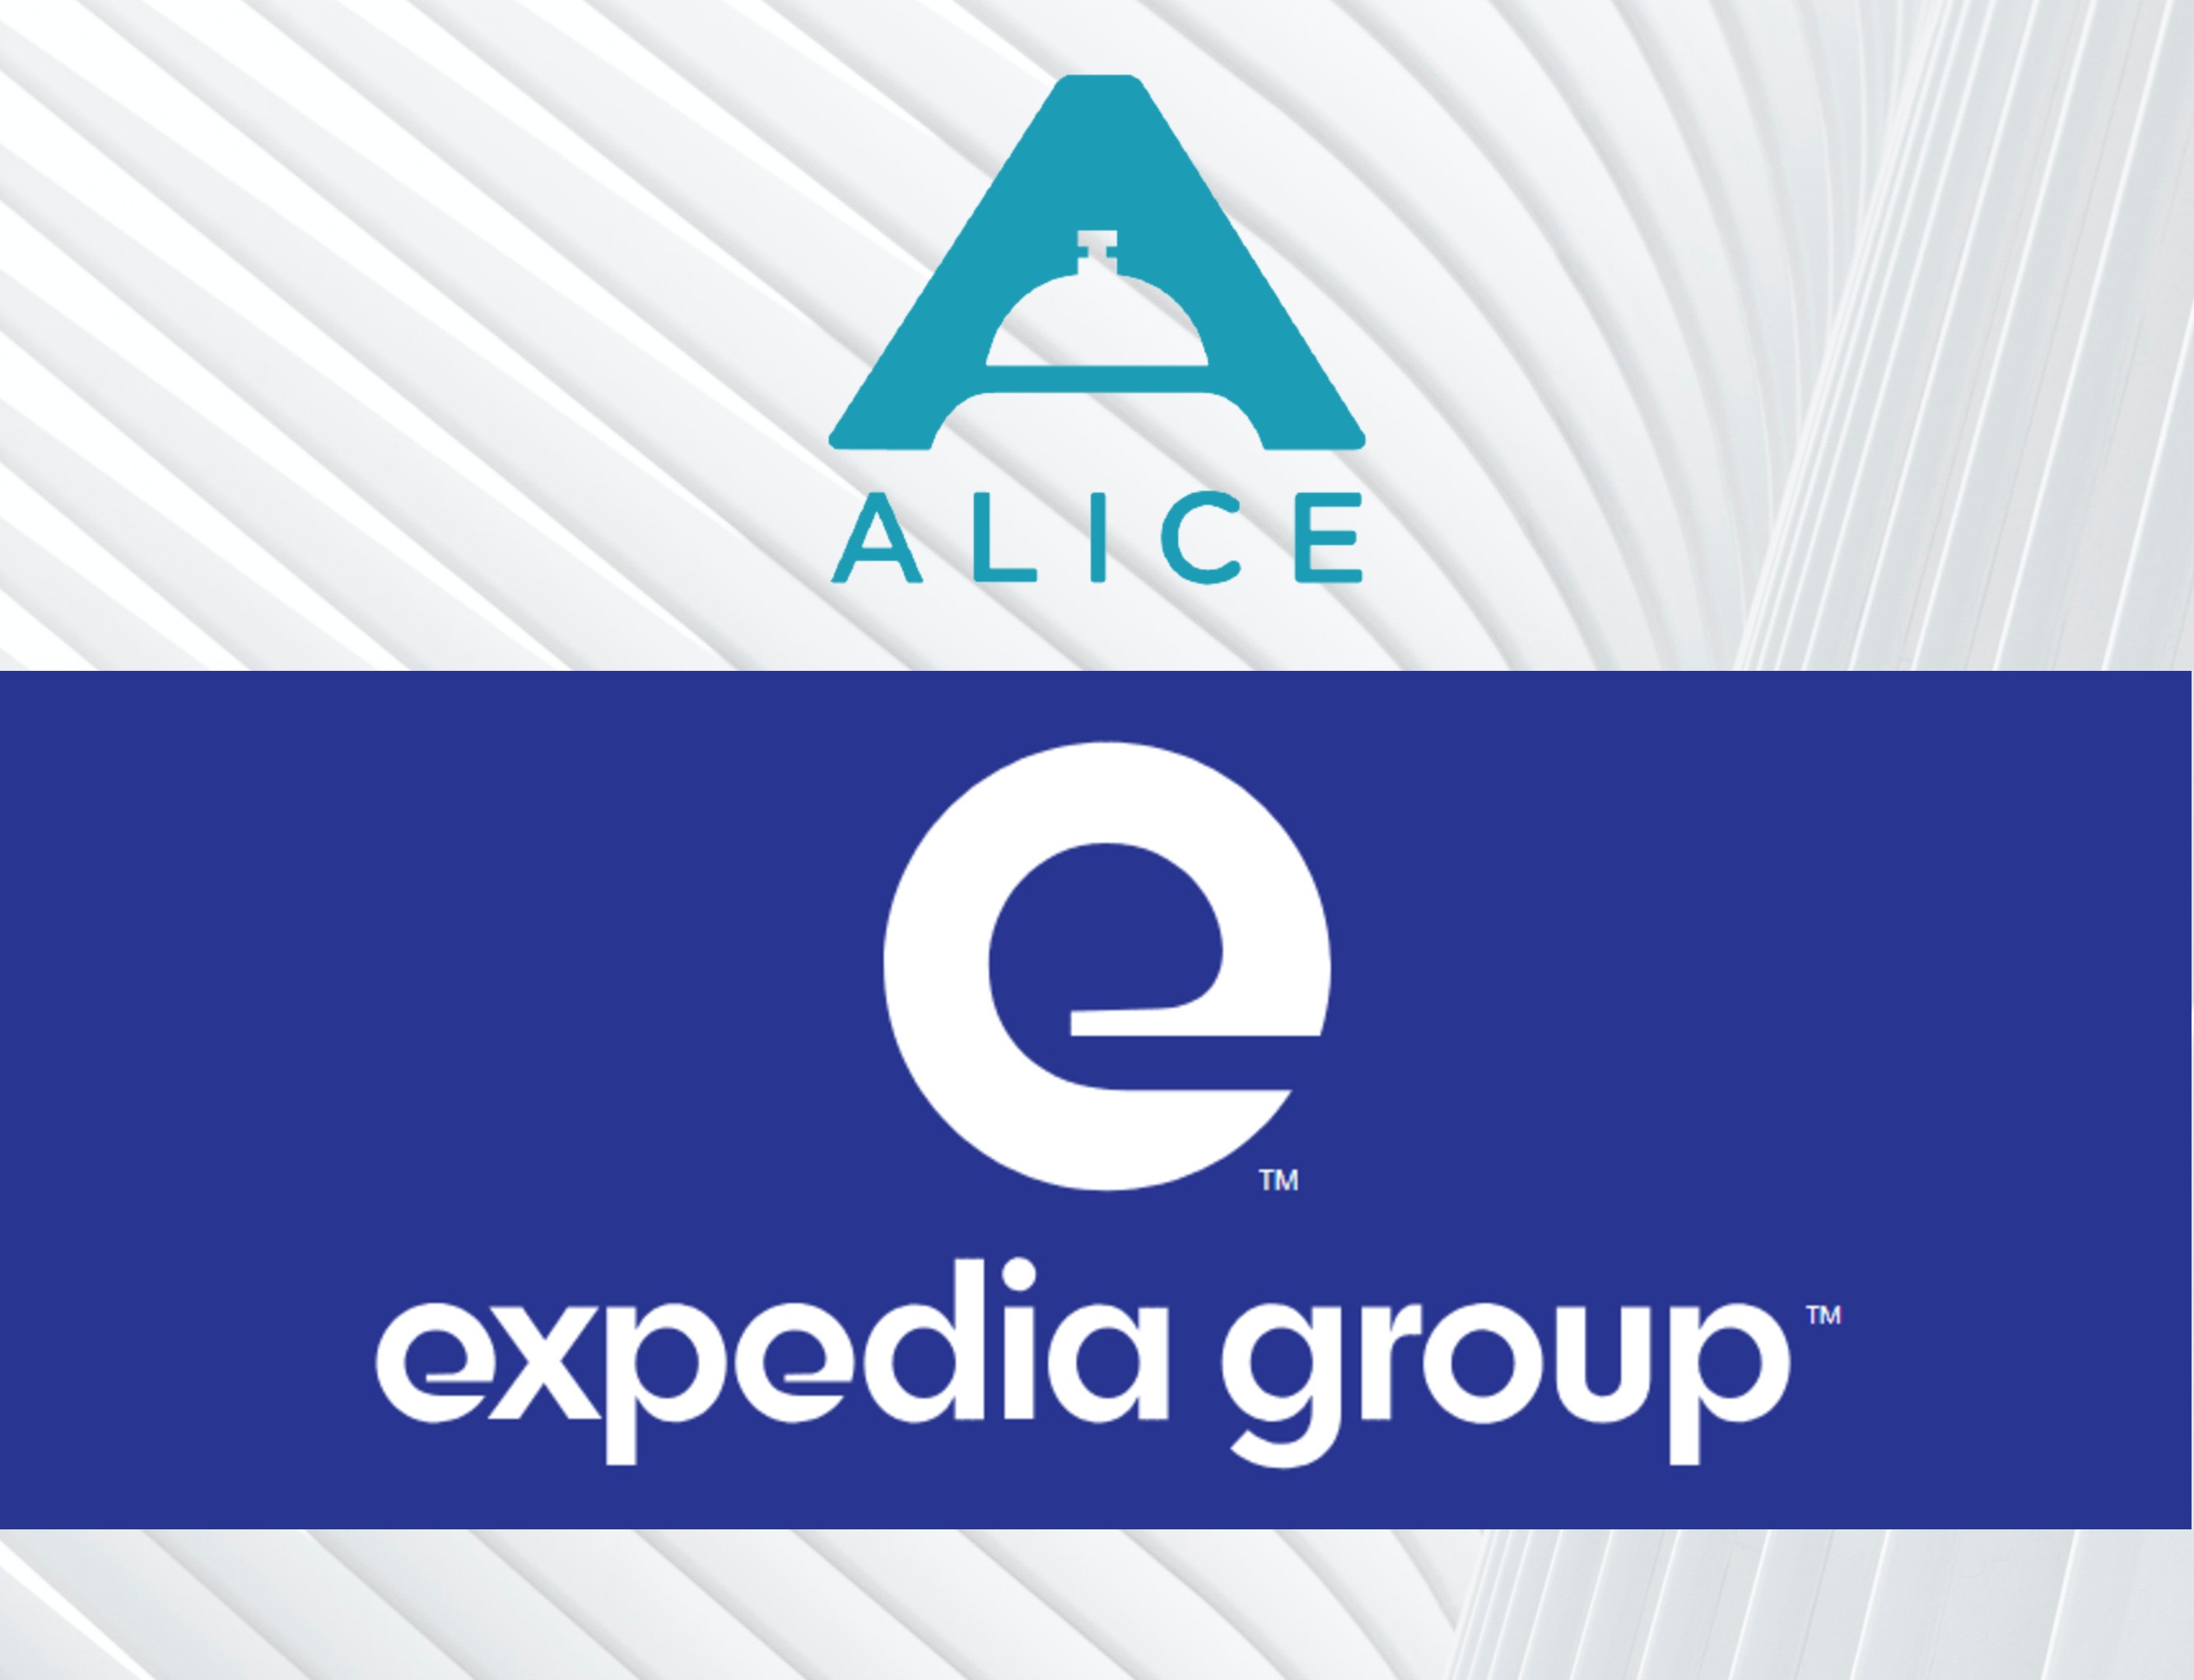 Expedia Group and Alice platform logos